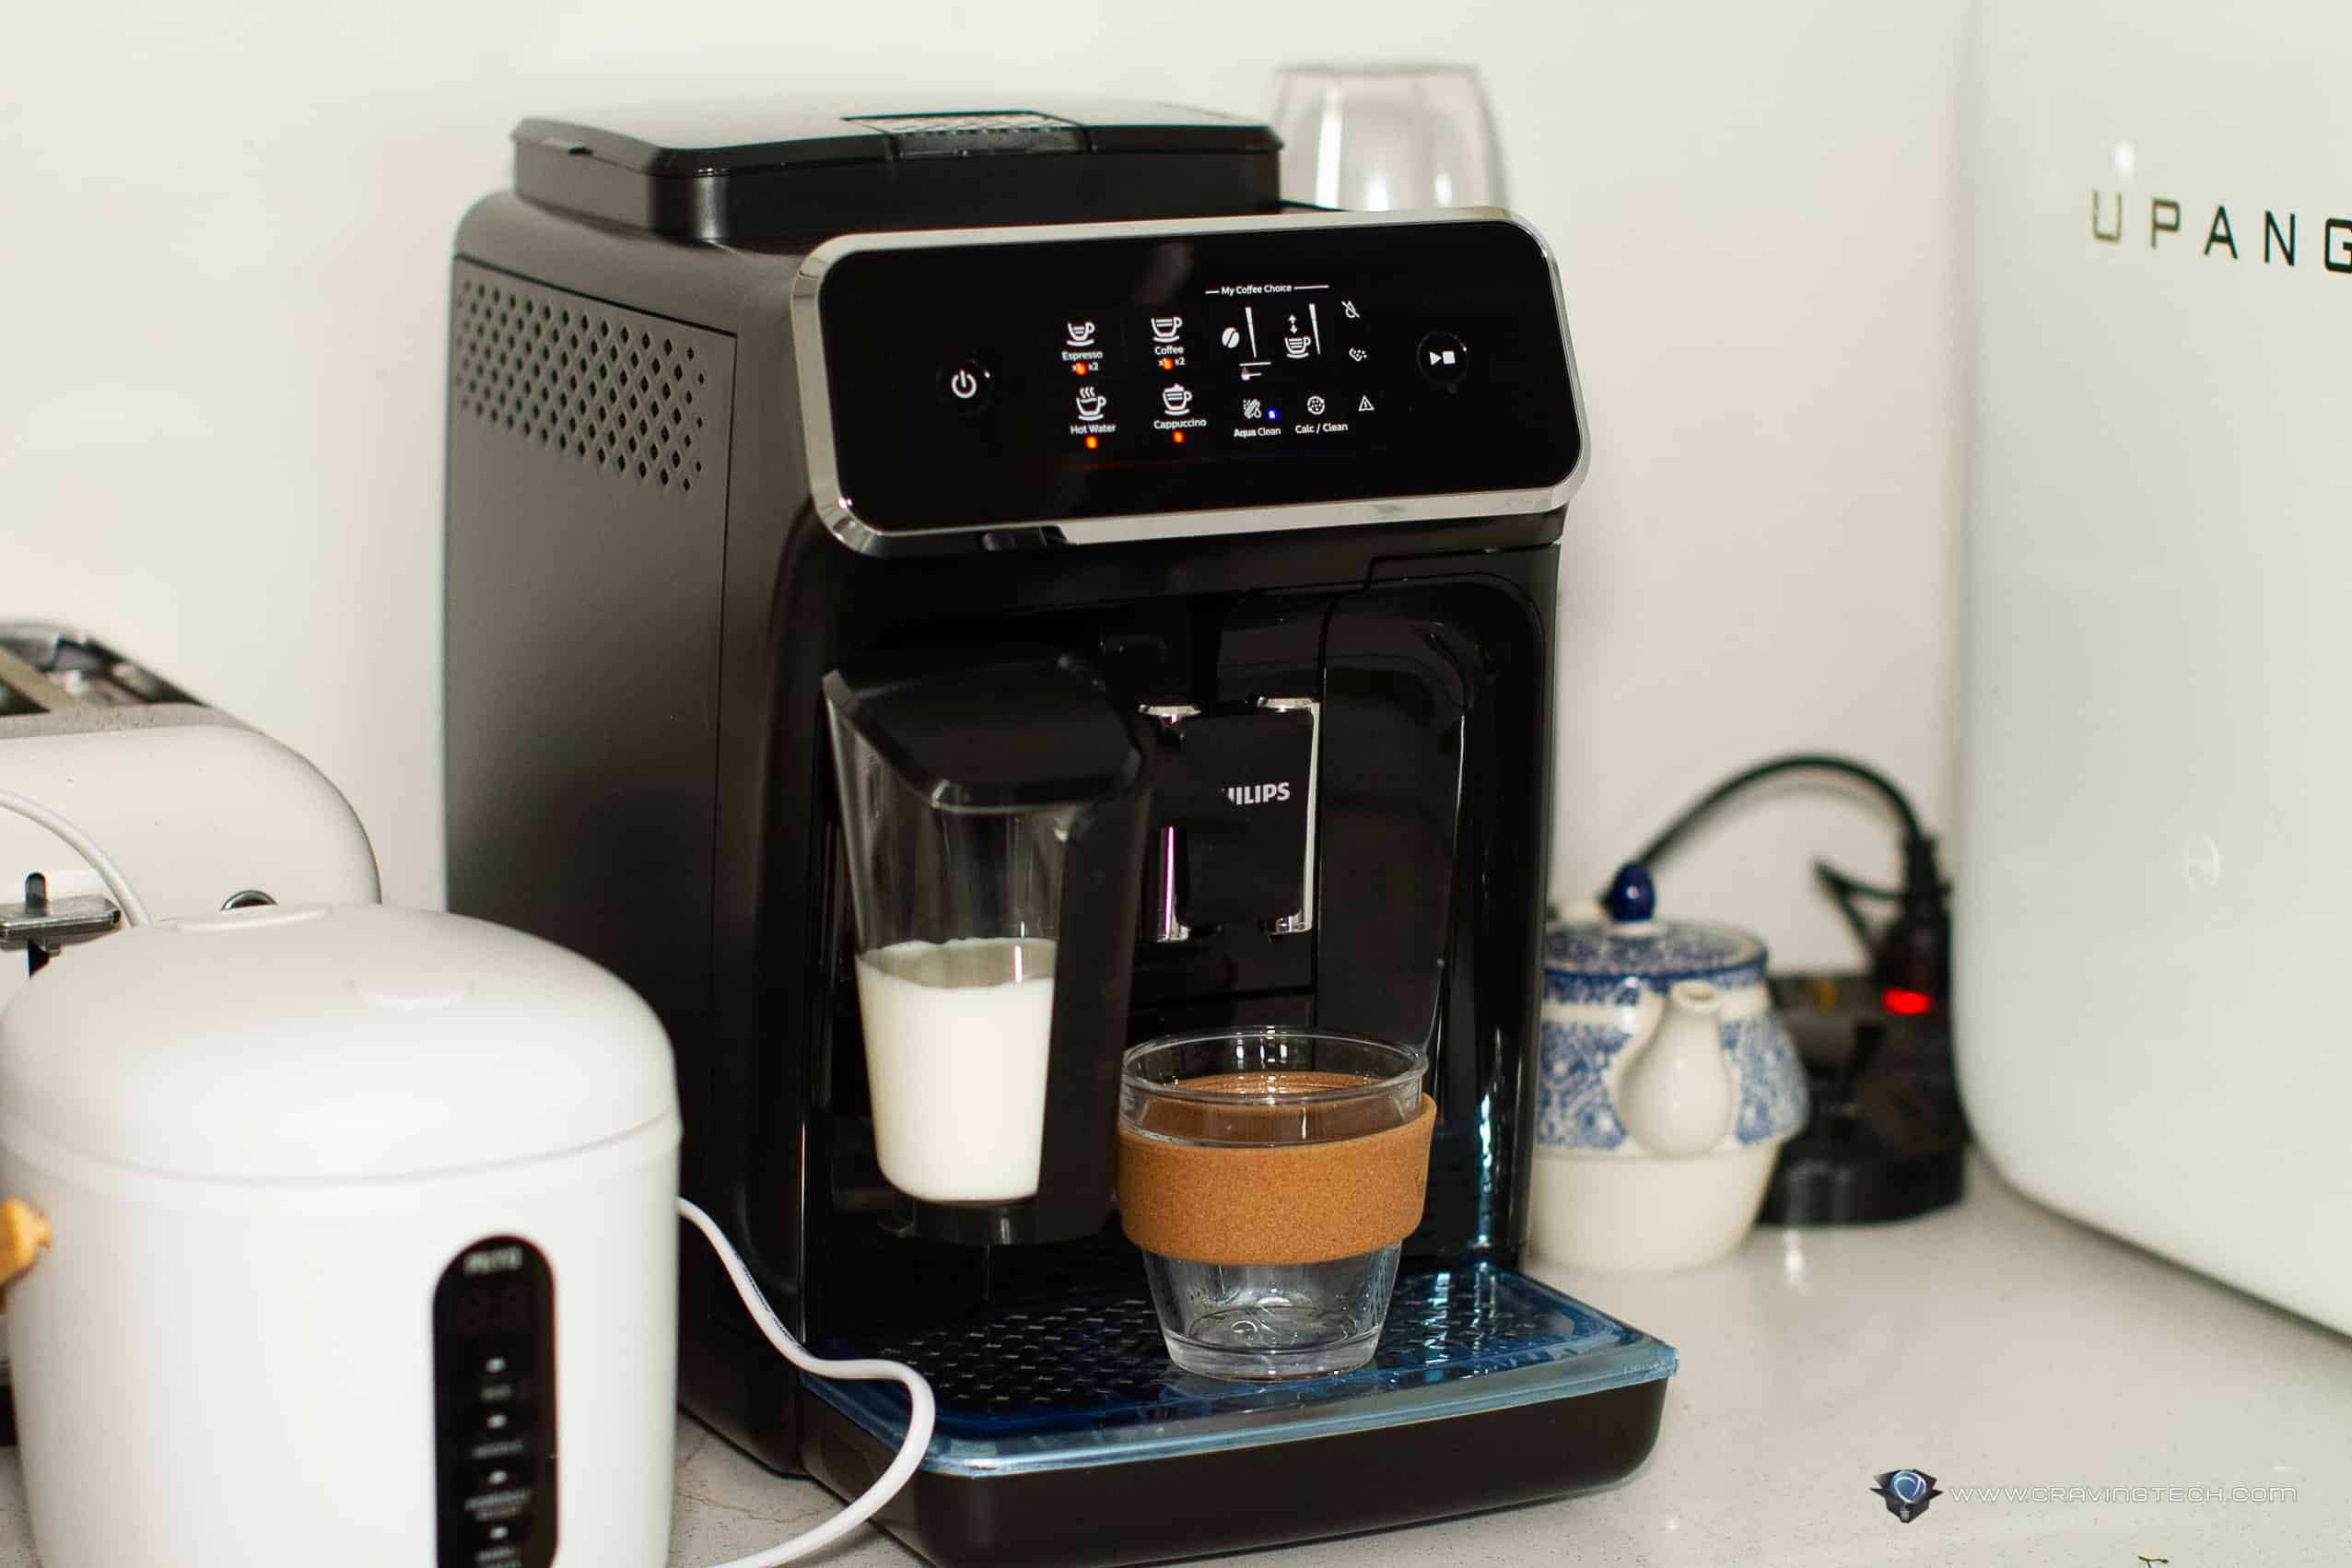 PHILIPS Kaffeevollautomat EP 2220/10 Serie 2200 Espressomaschine Testsieger  8710103877424